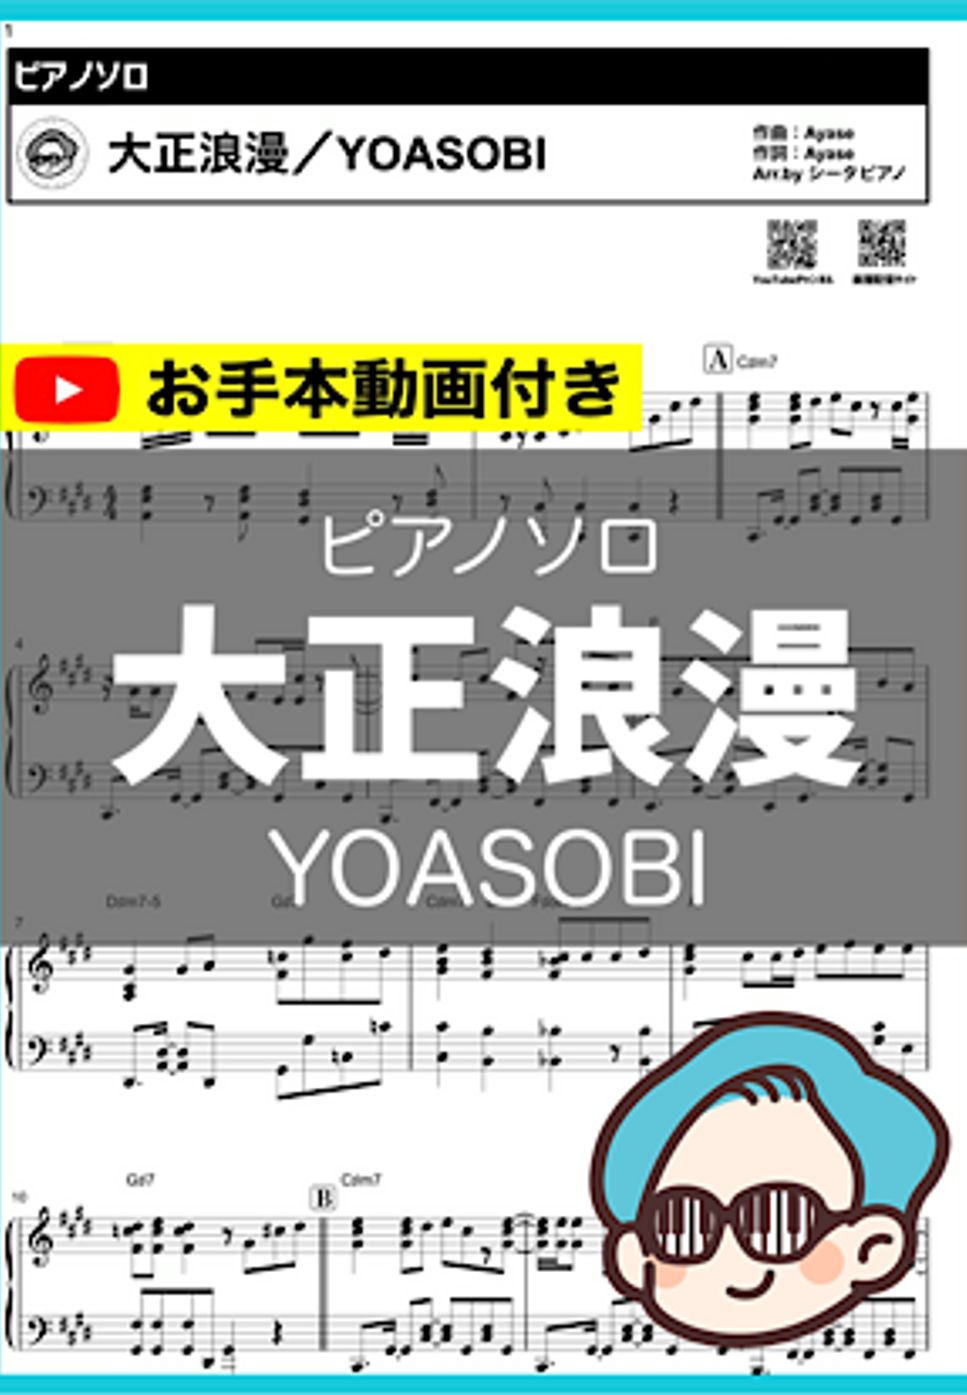 YOASOBI - 大正浪漫 by シータピアノ